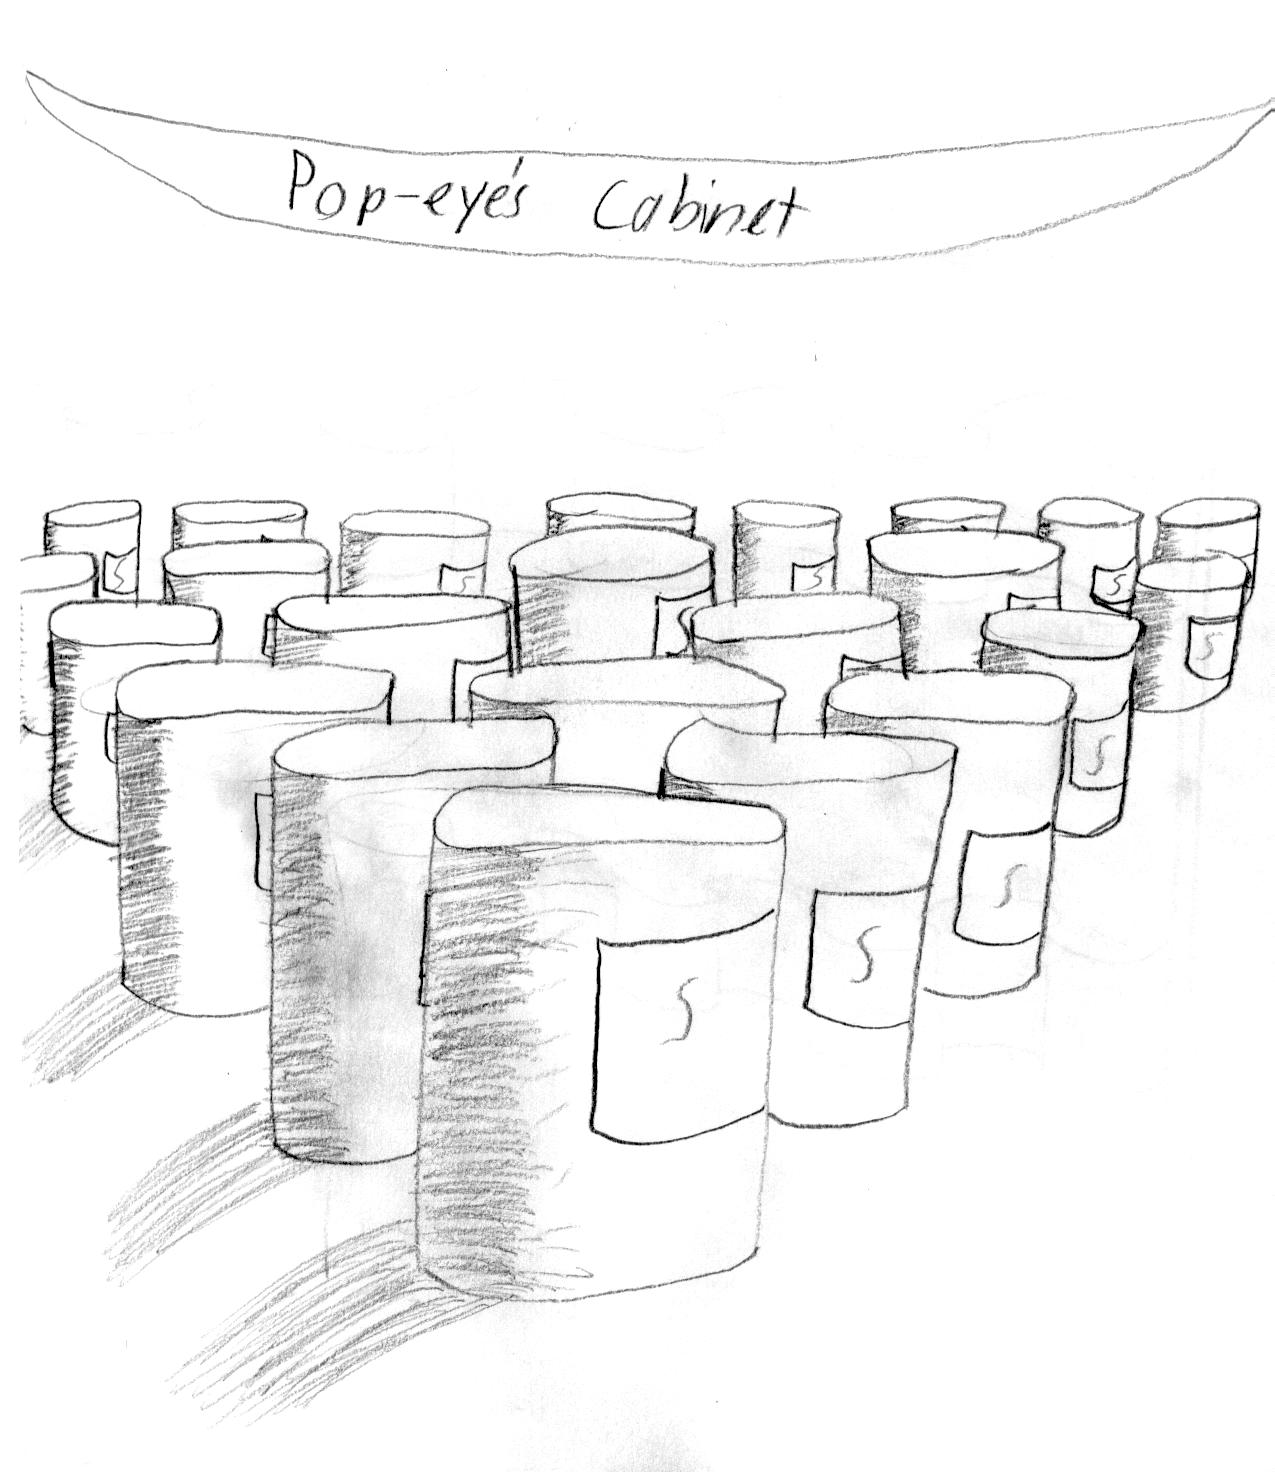 Popeye's Cabinet